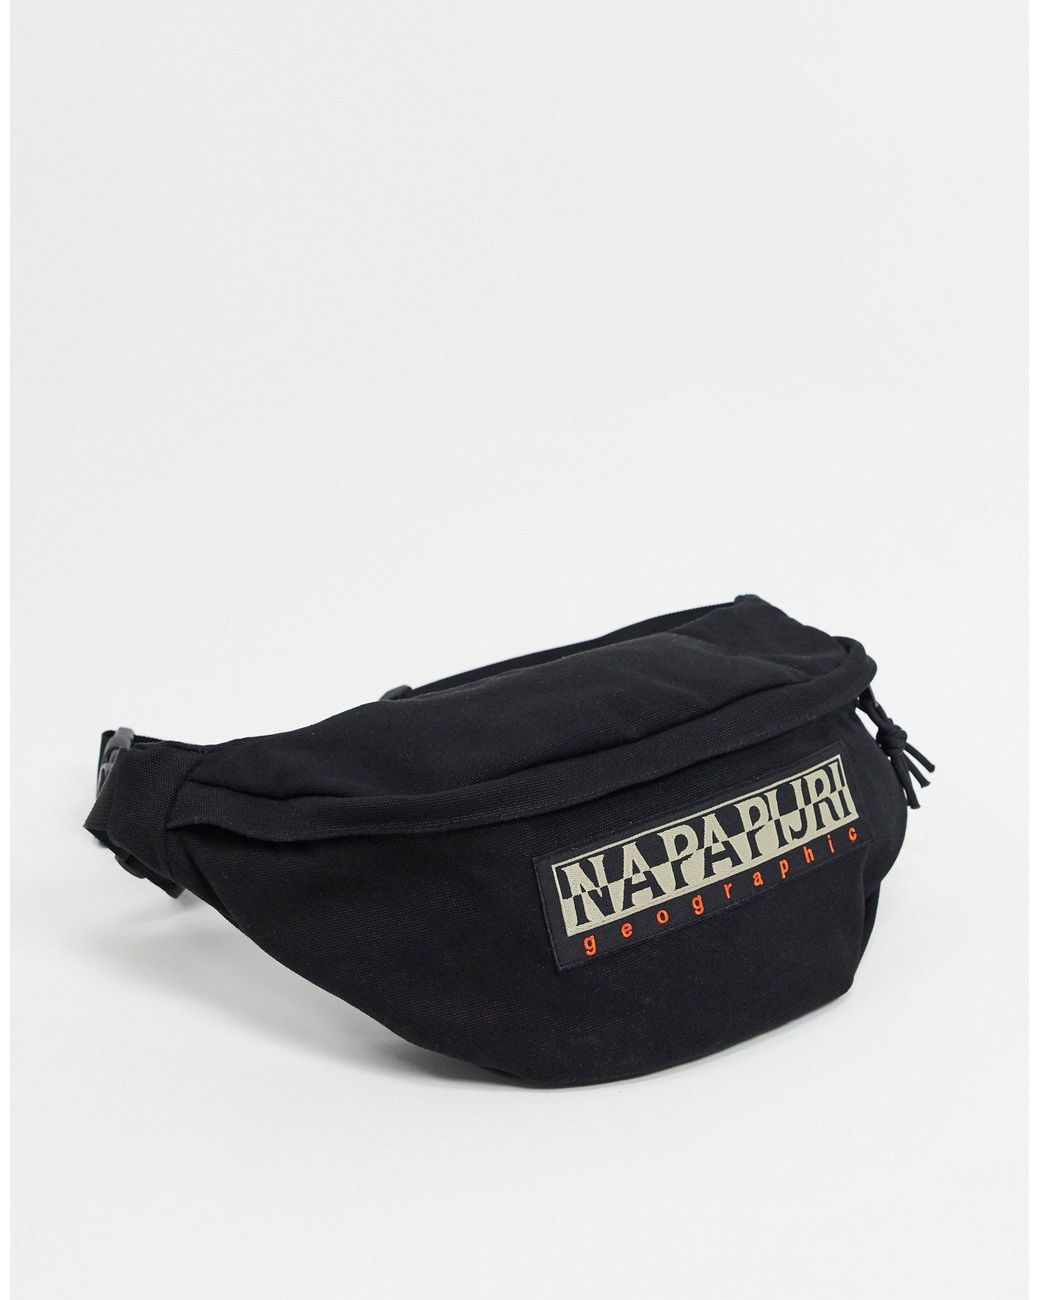 Napapijri Cotton Haset Bum Bag in Black for Men | Lyst